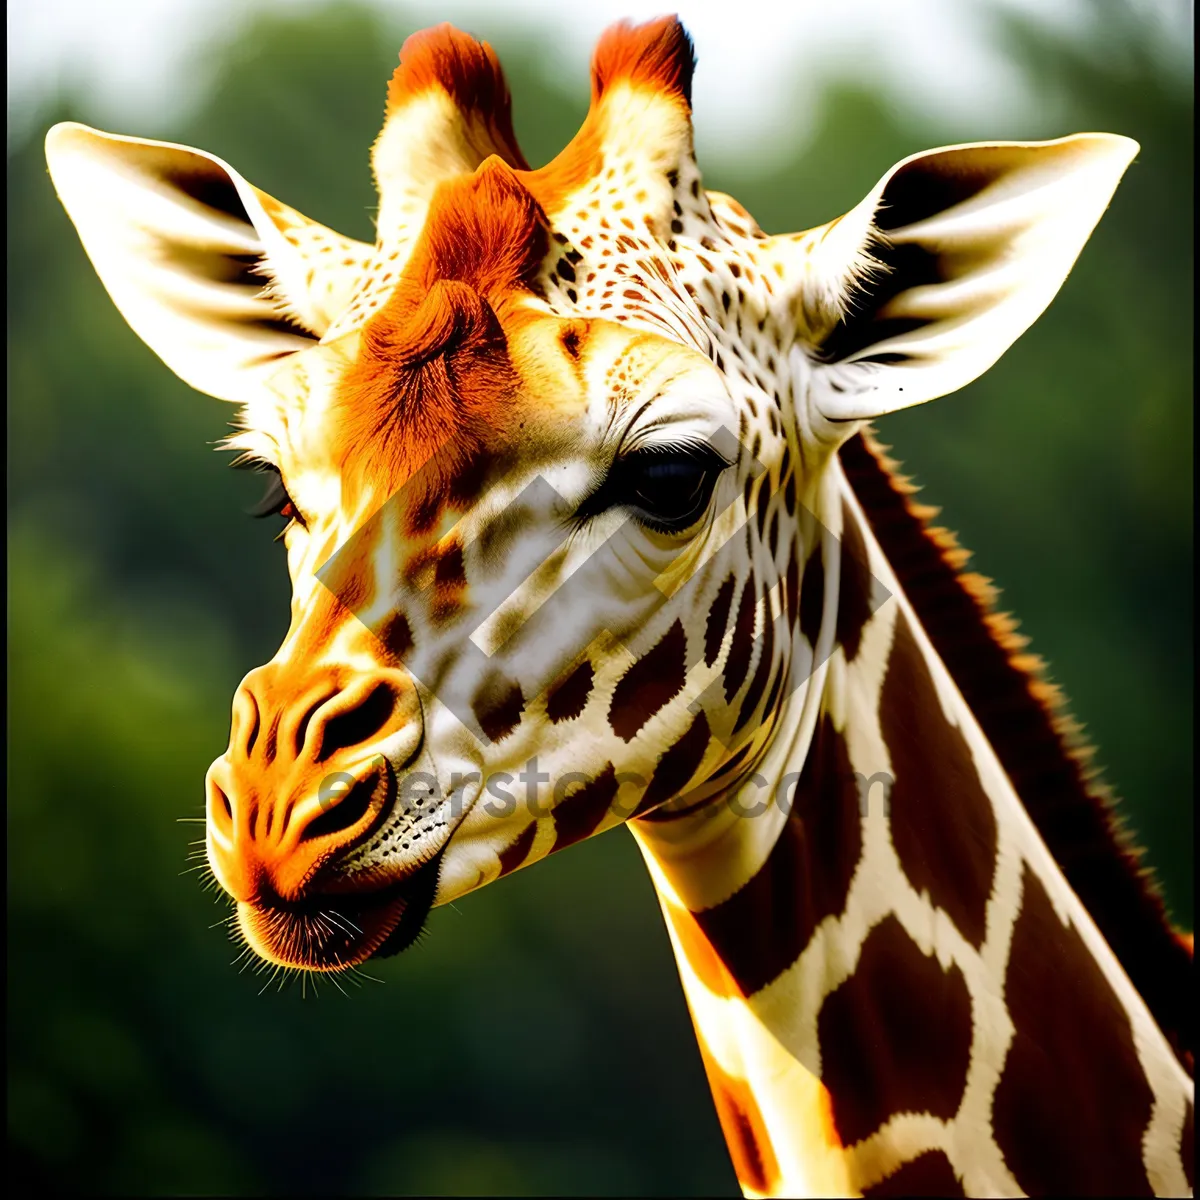 Picture of Striped Giraffe in South African Safari